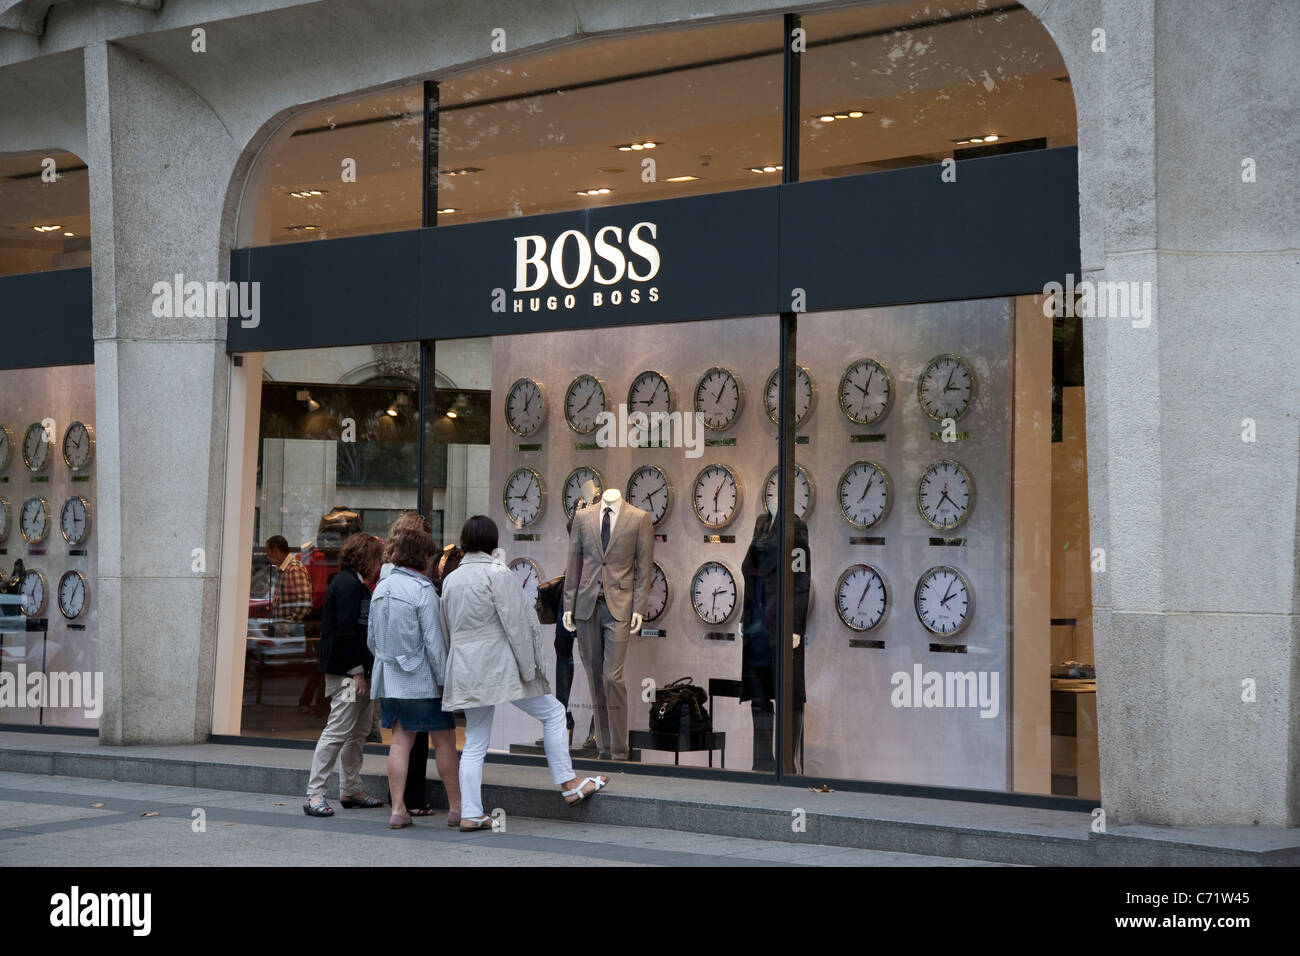 Paris France September 2019 Hugo Boss Luxury Store Champs Elysees – Stock  Editorial Photo © daboost #349591944